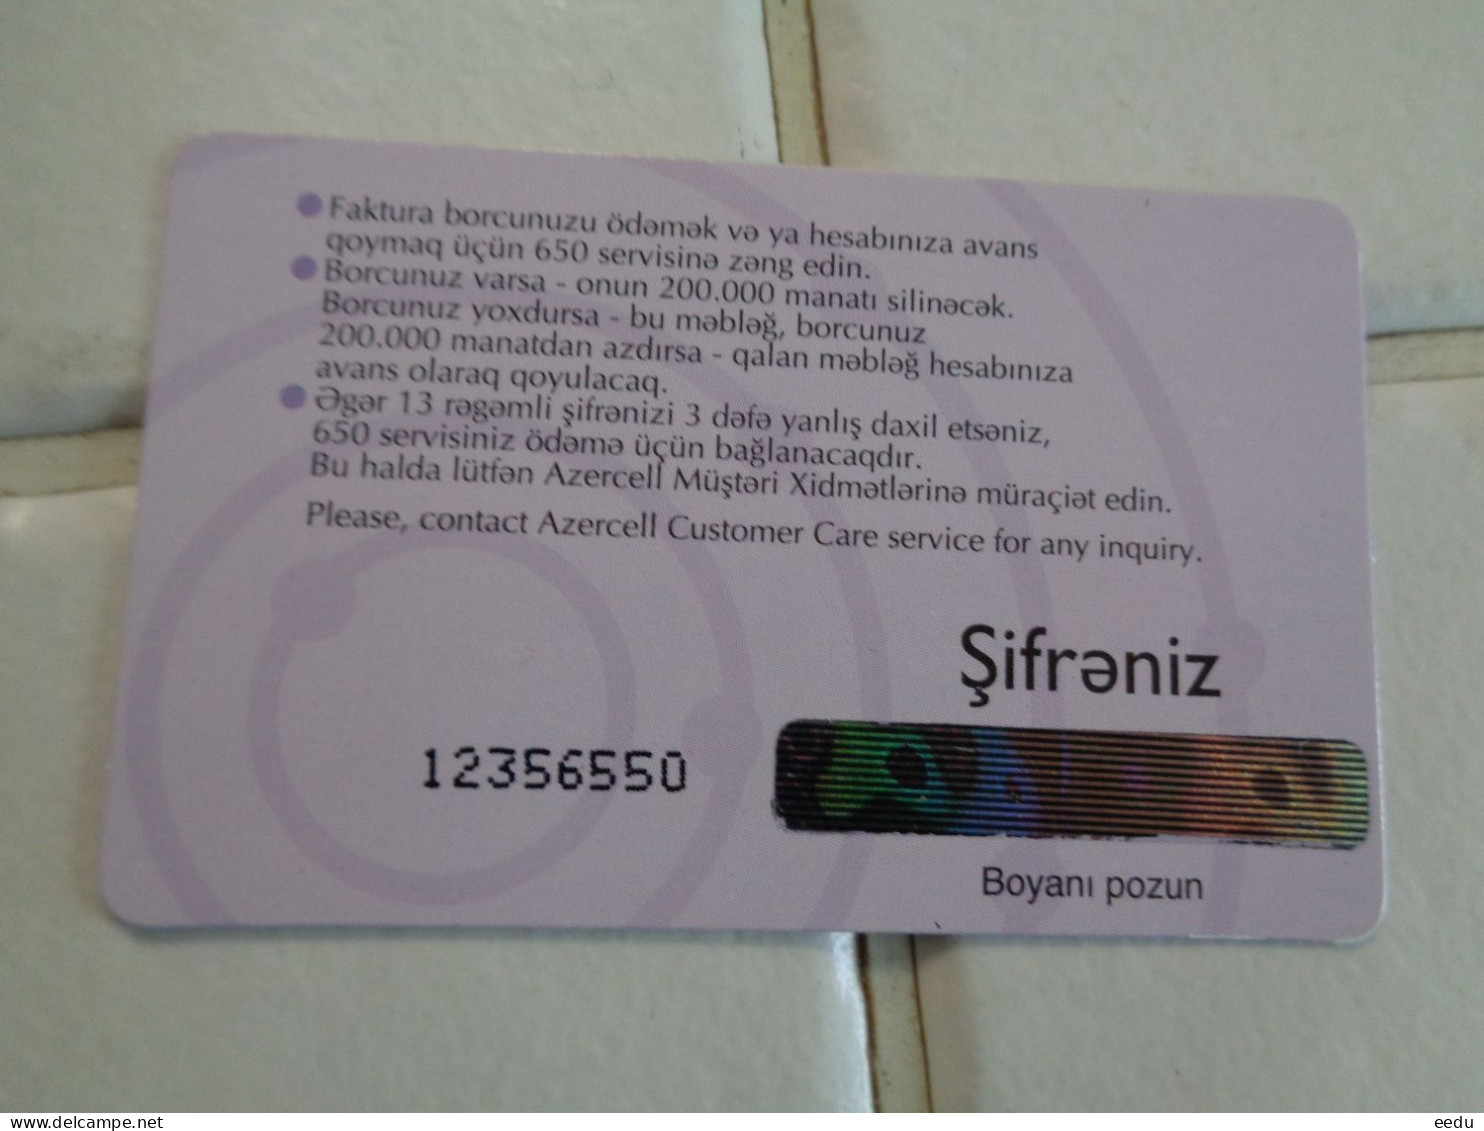 Azerbaijan Phonecard - Azerbeidzjan